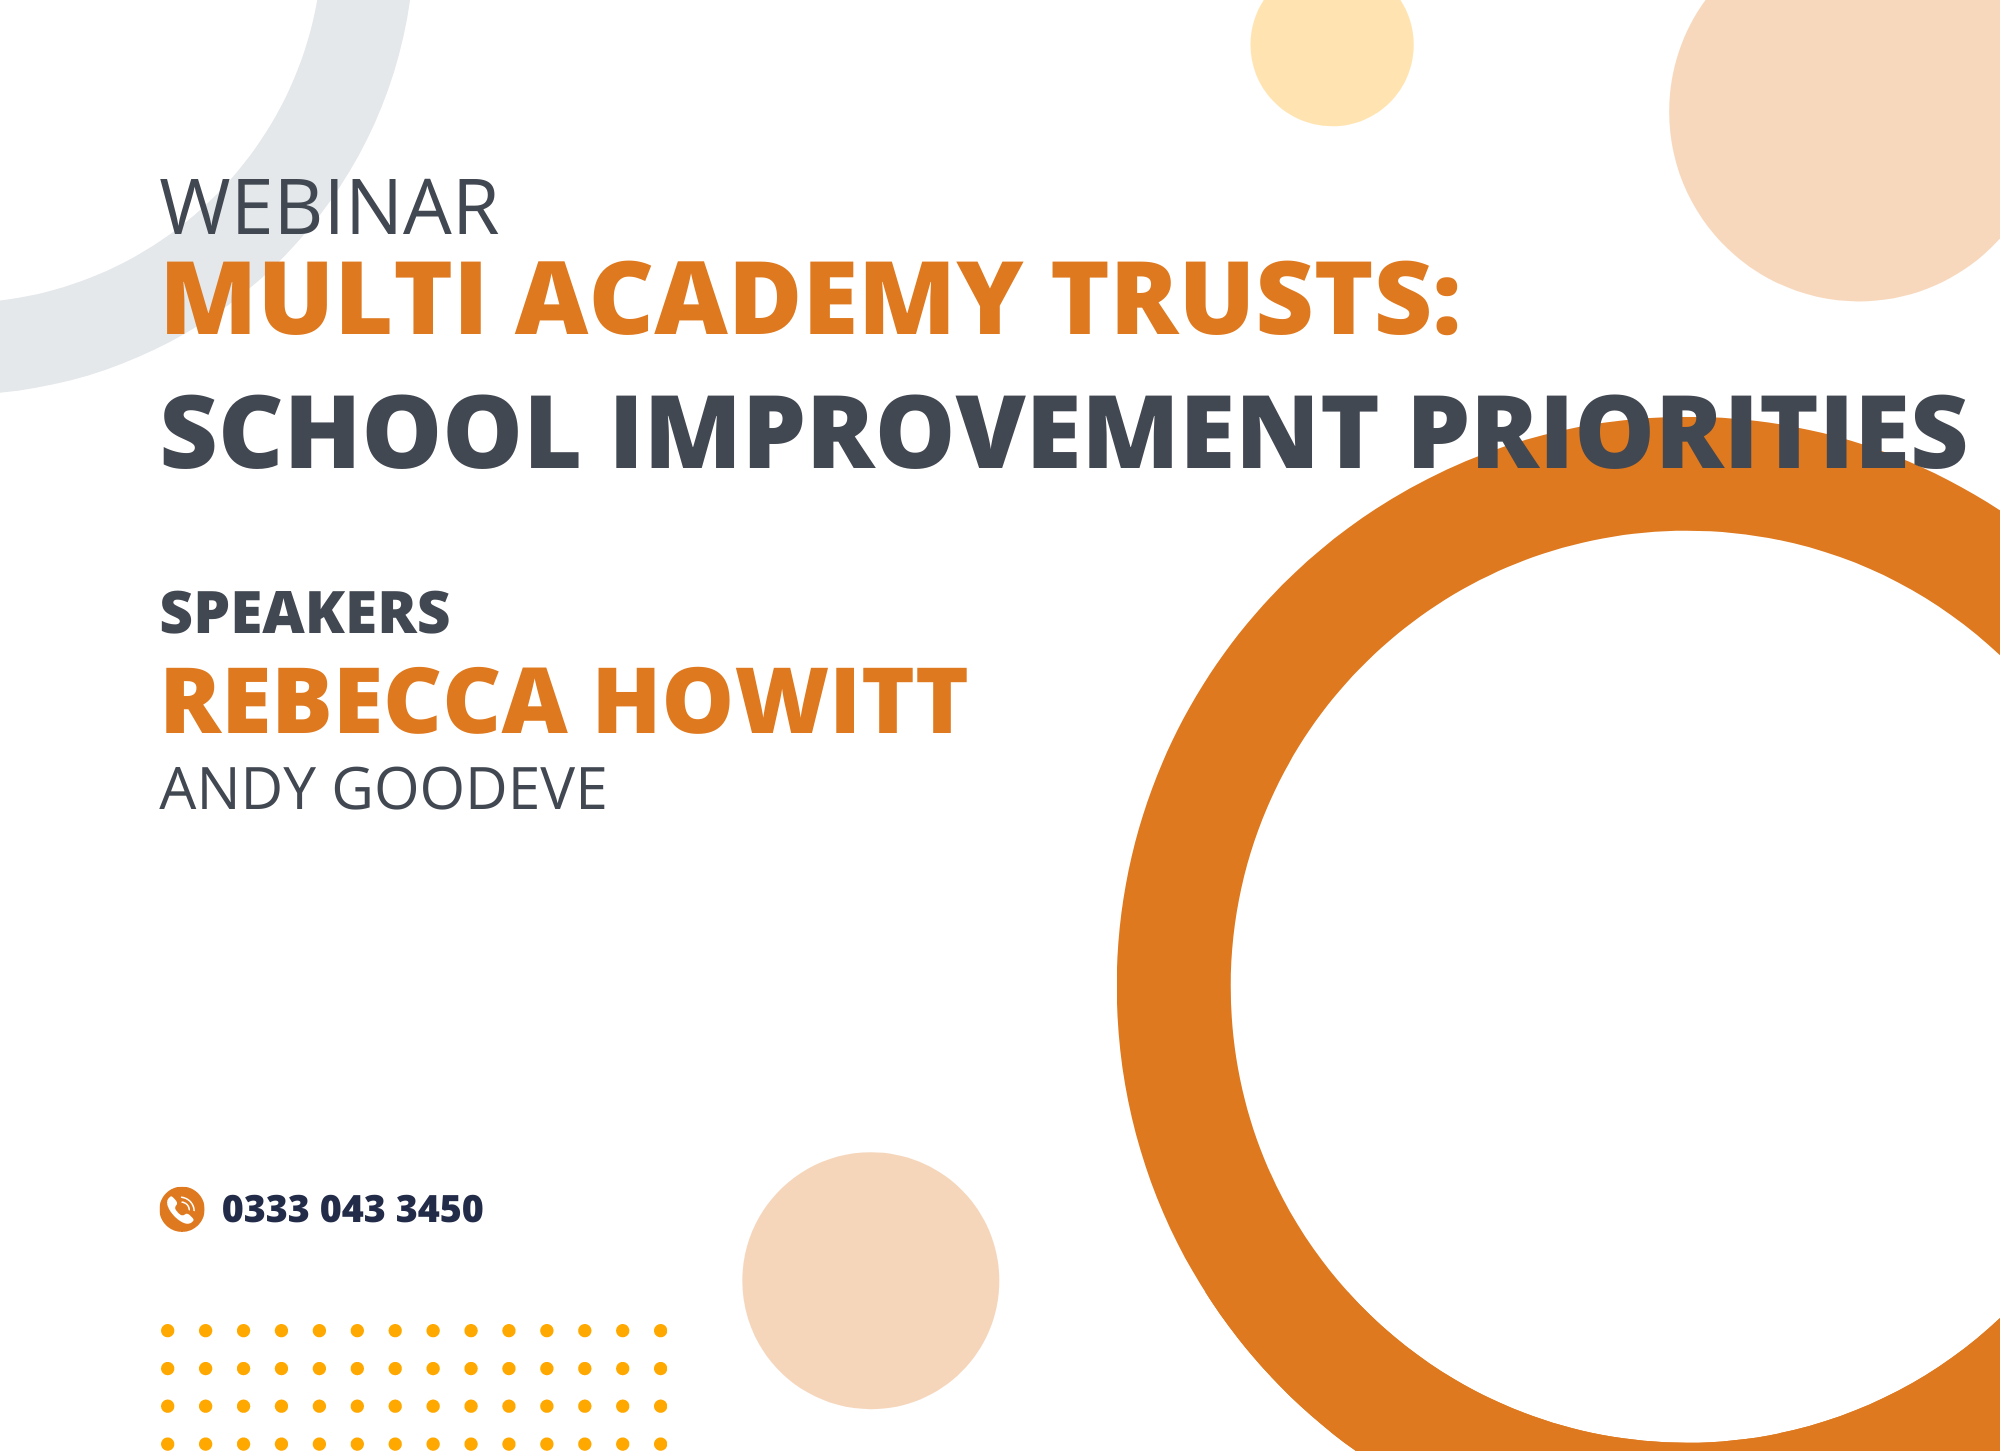 Multi Academy Trusts: School Improvement Priorities